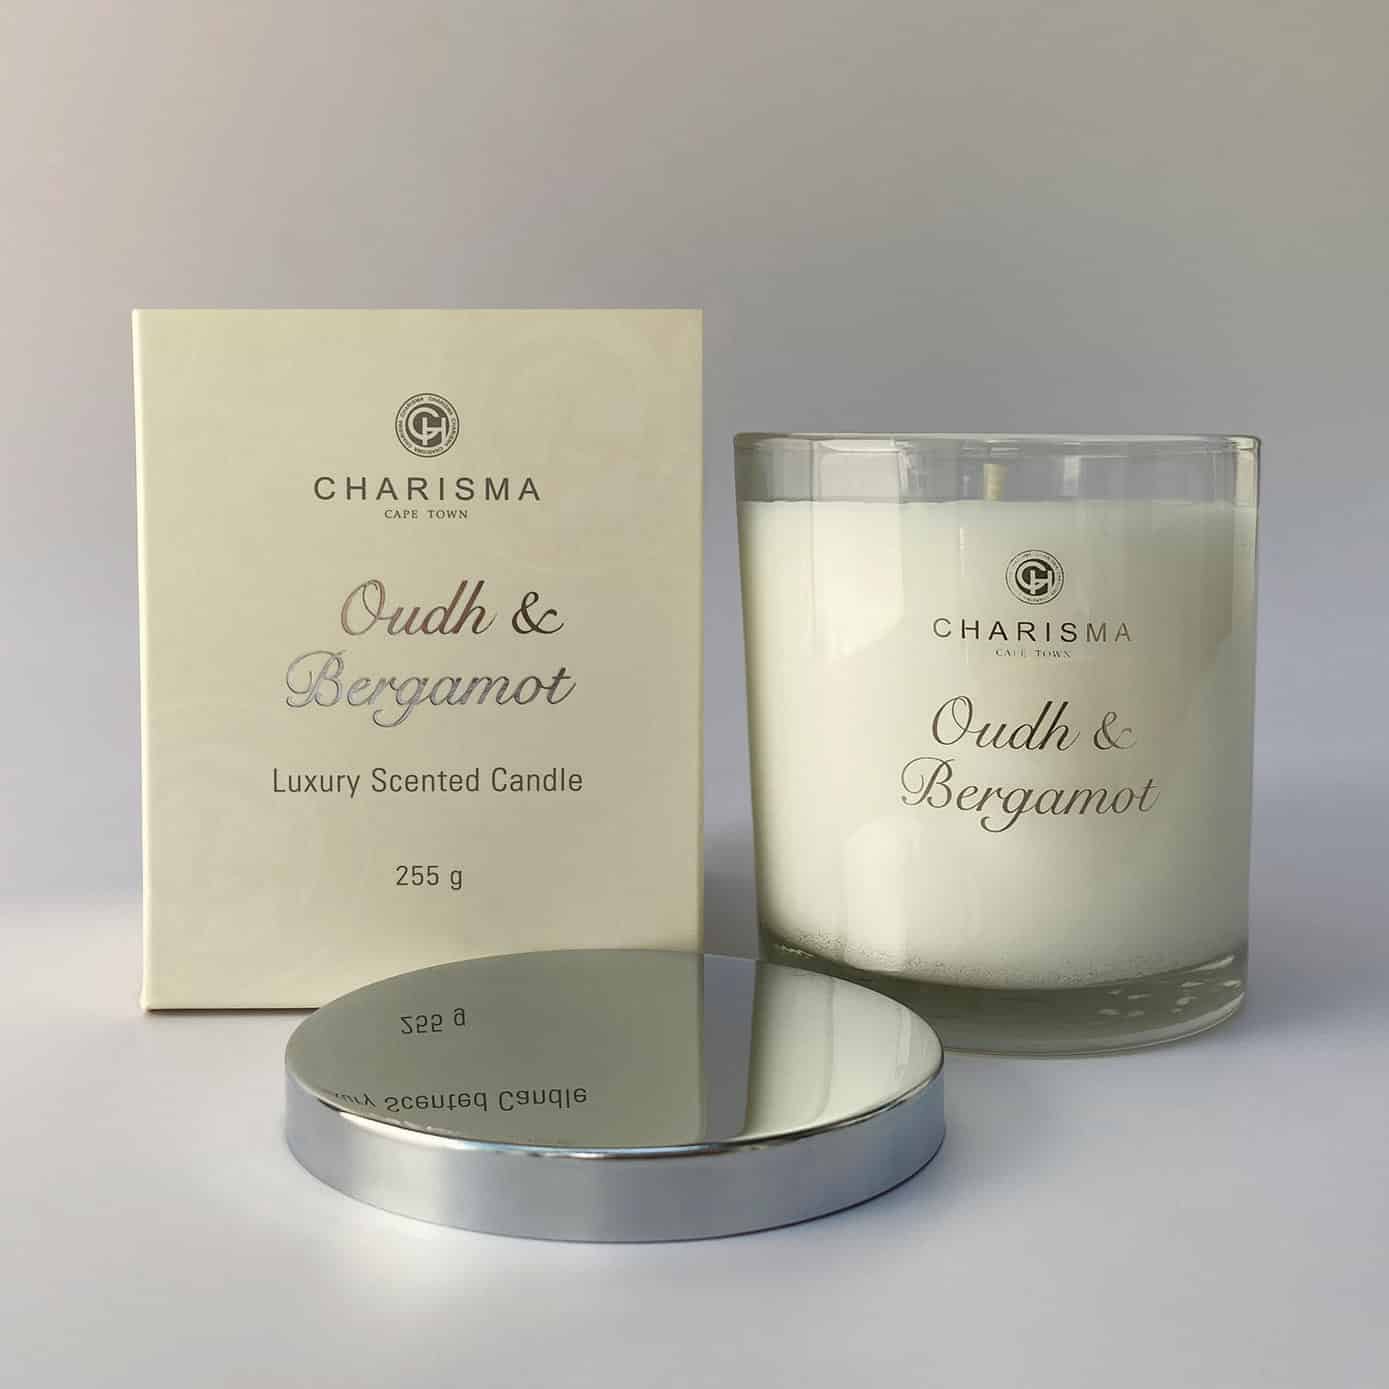 Charisma Oudh & Bergamot Candle 255g